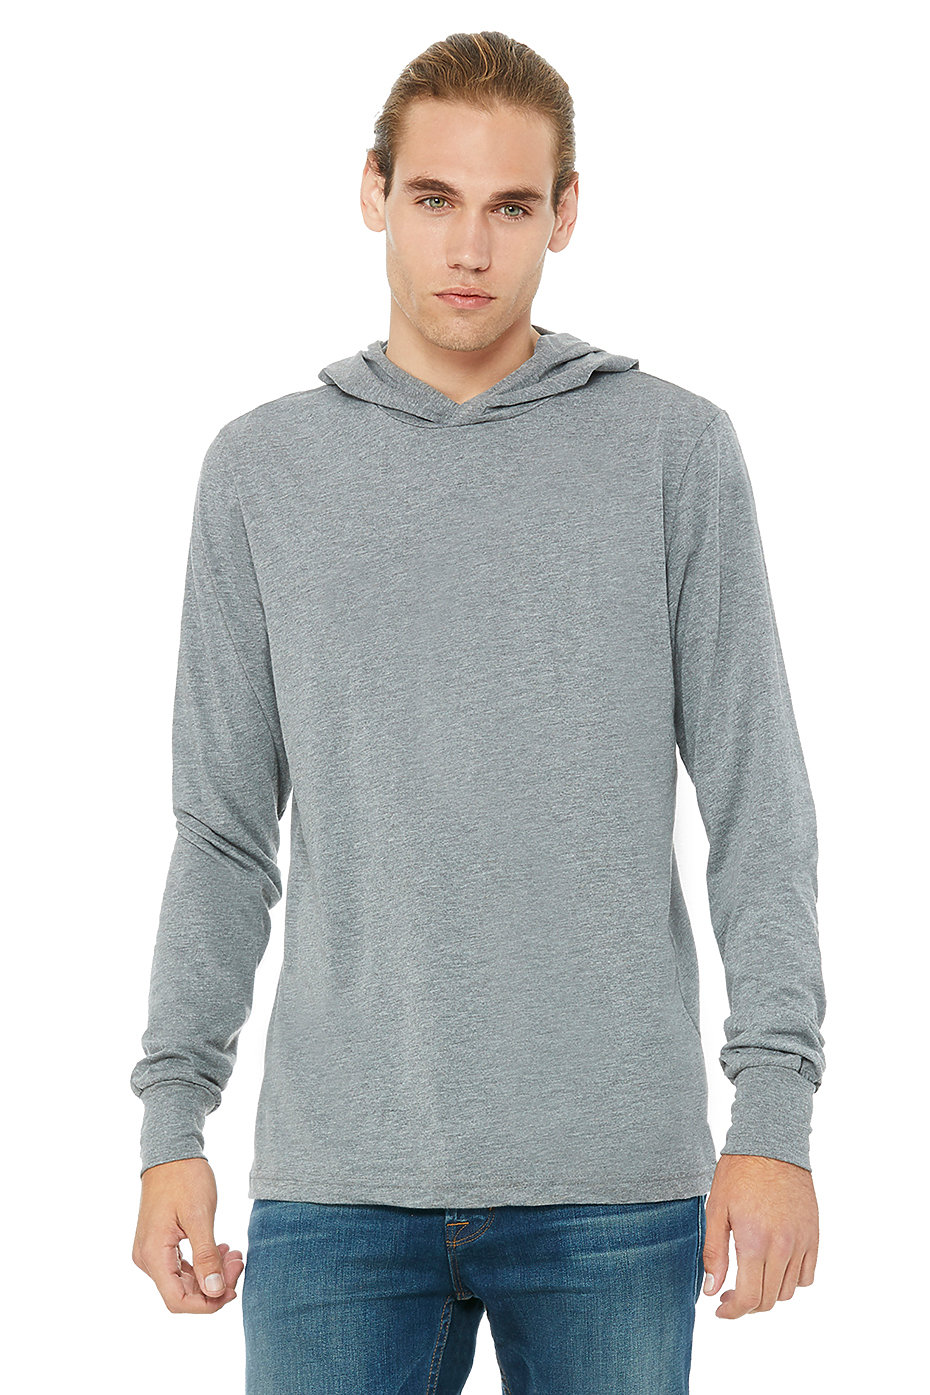 Belligebeavs pac2 shirt, hoodie, sweater, long sleeve and tank top